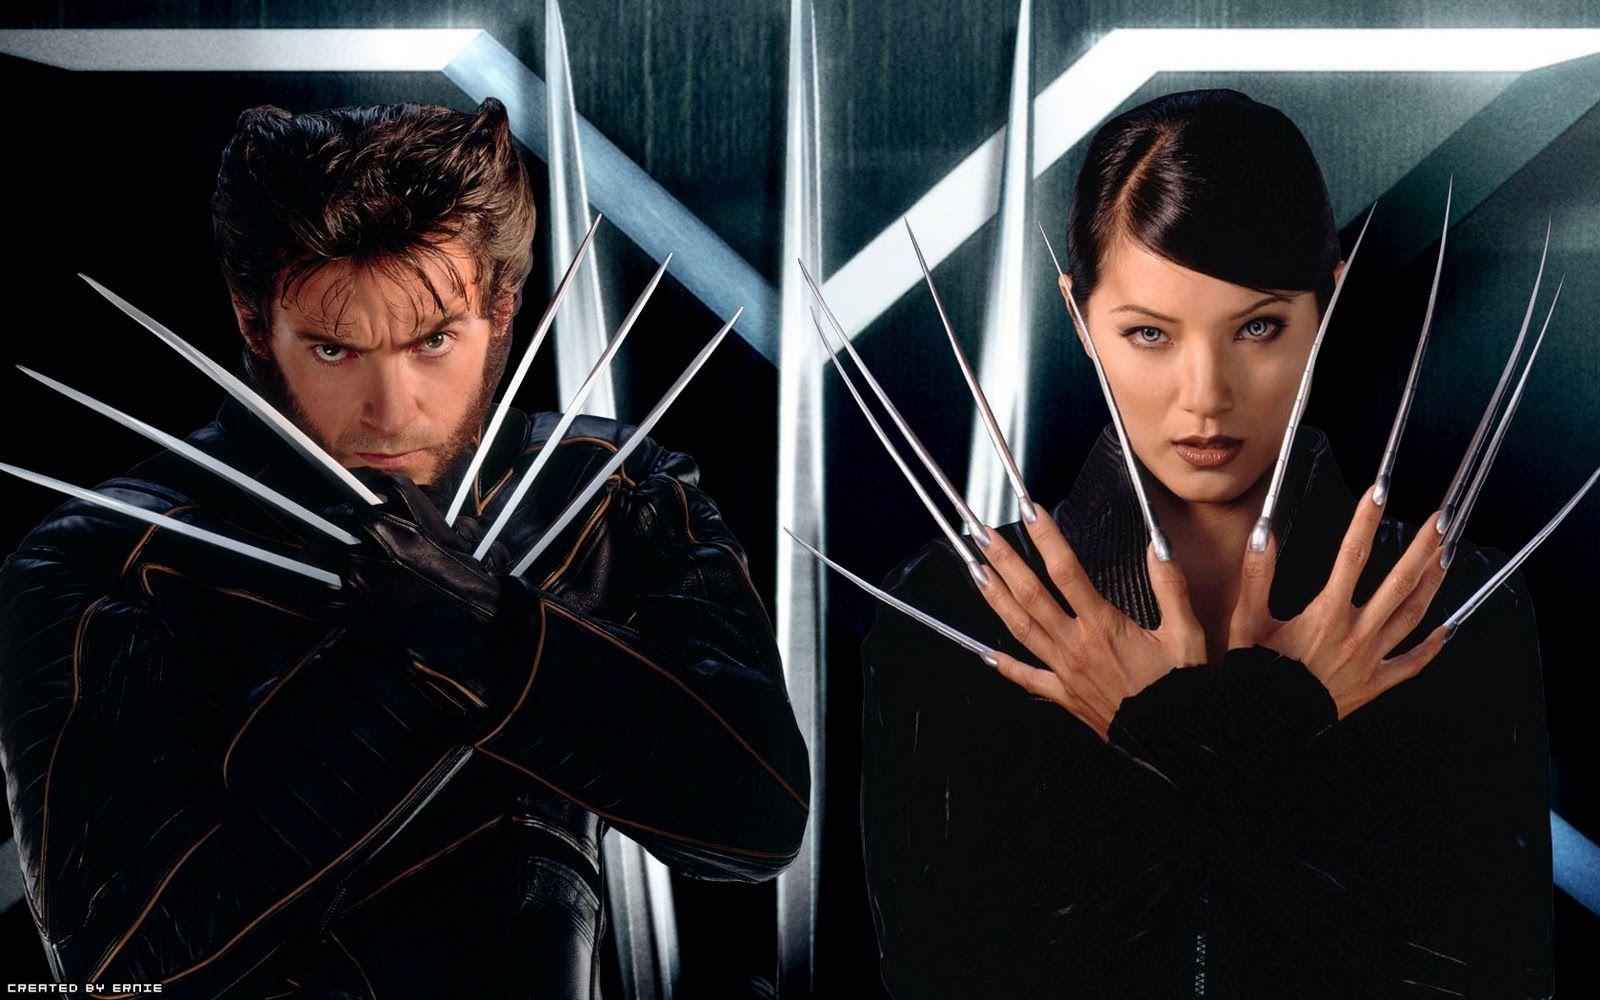 X Men Origins Picture And Videos: X Man Wallpaper. Beautiful